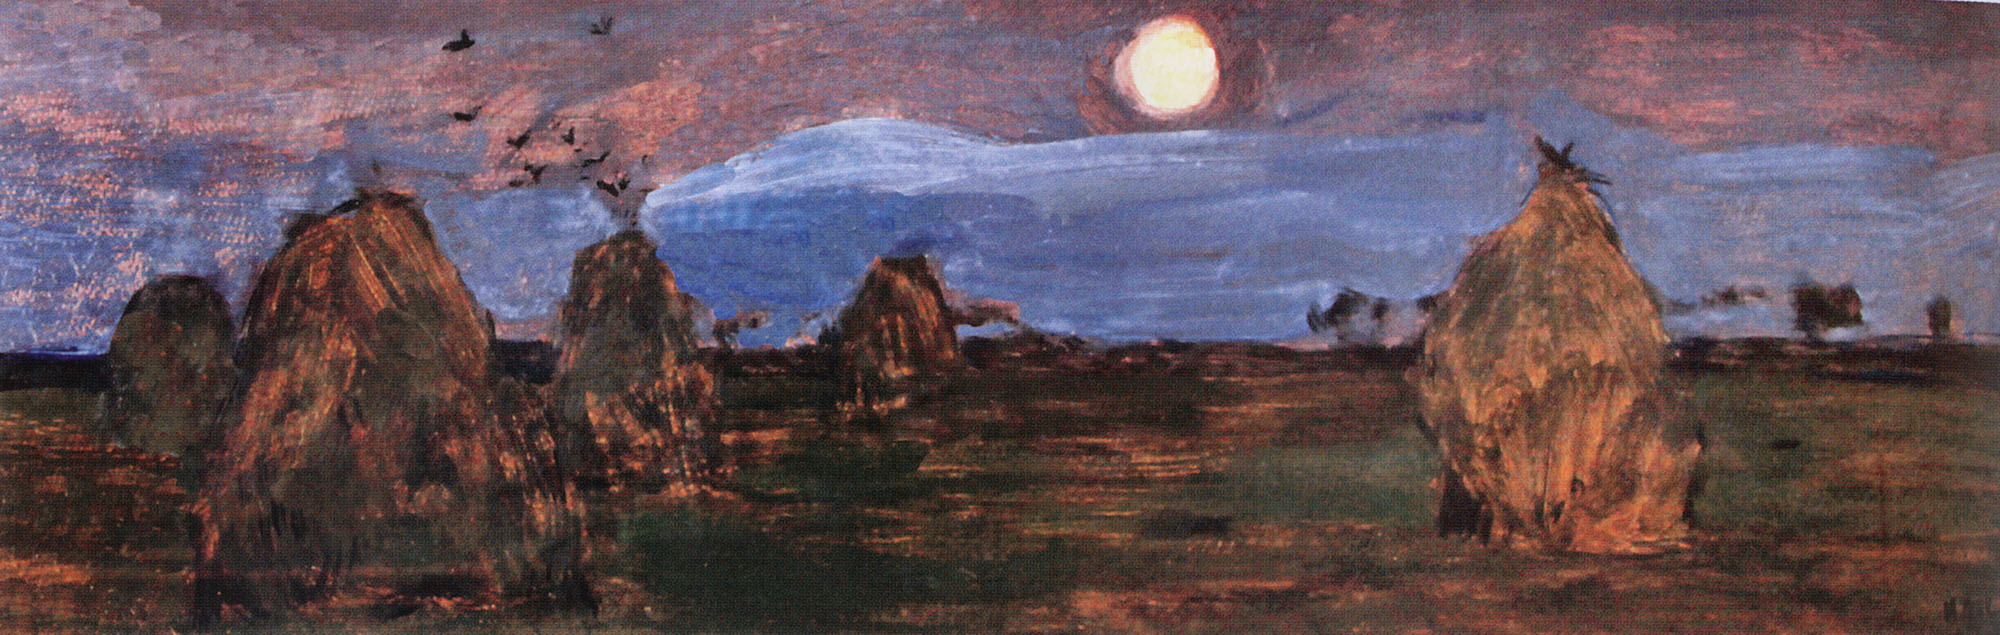 Левитан И.. Стога сена в лунную ночь. 1899